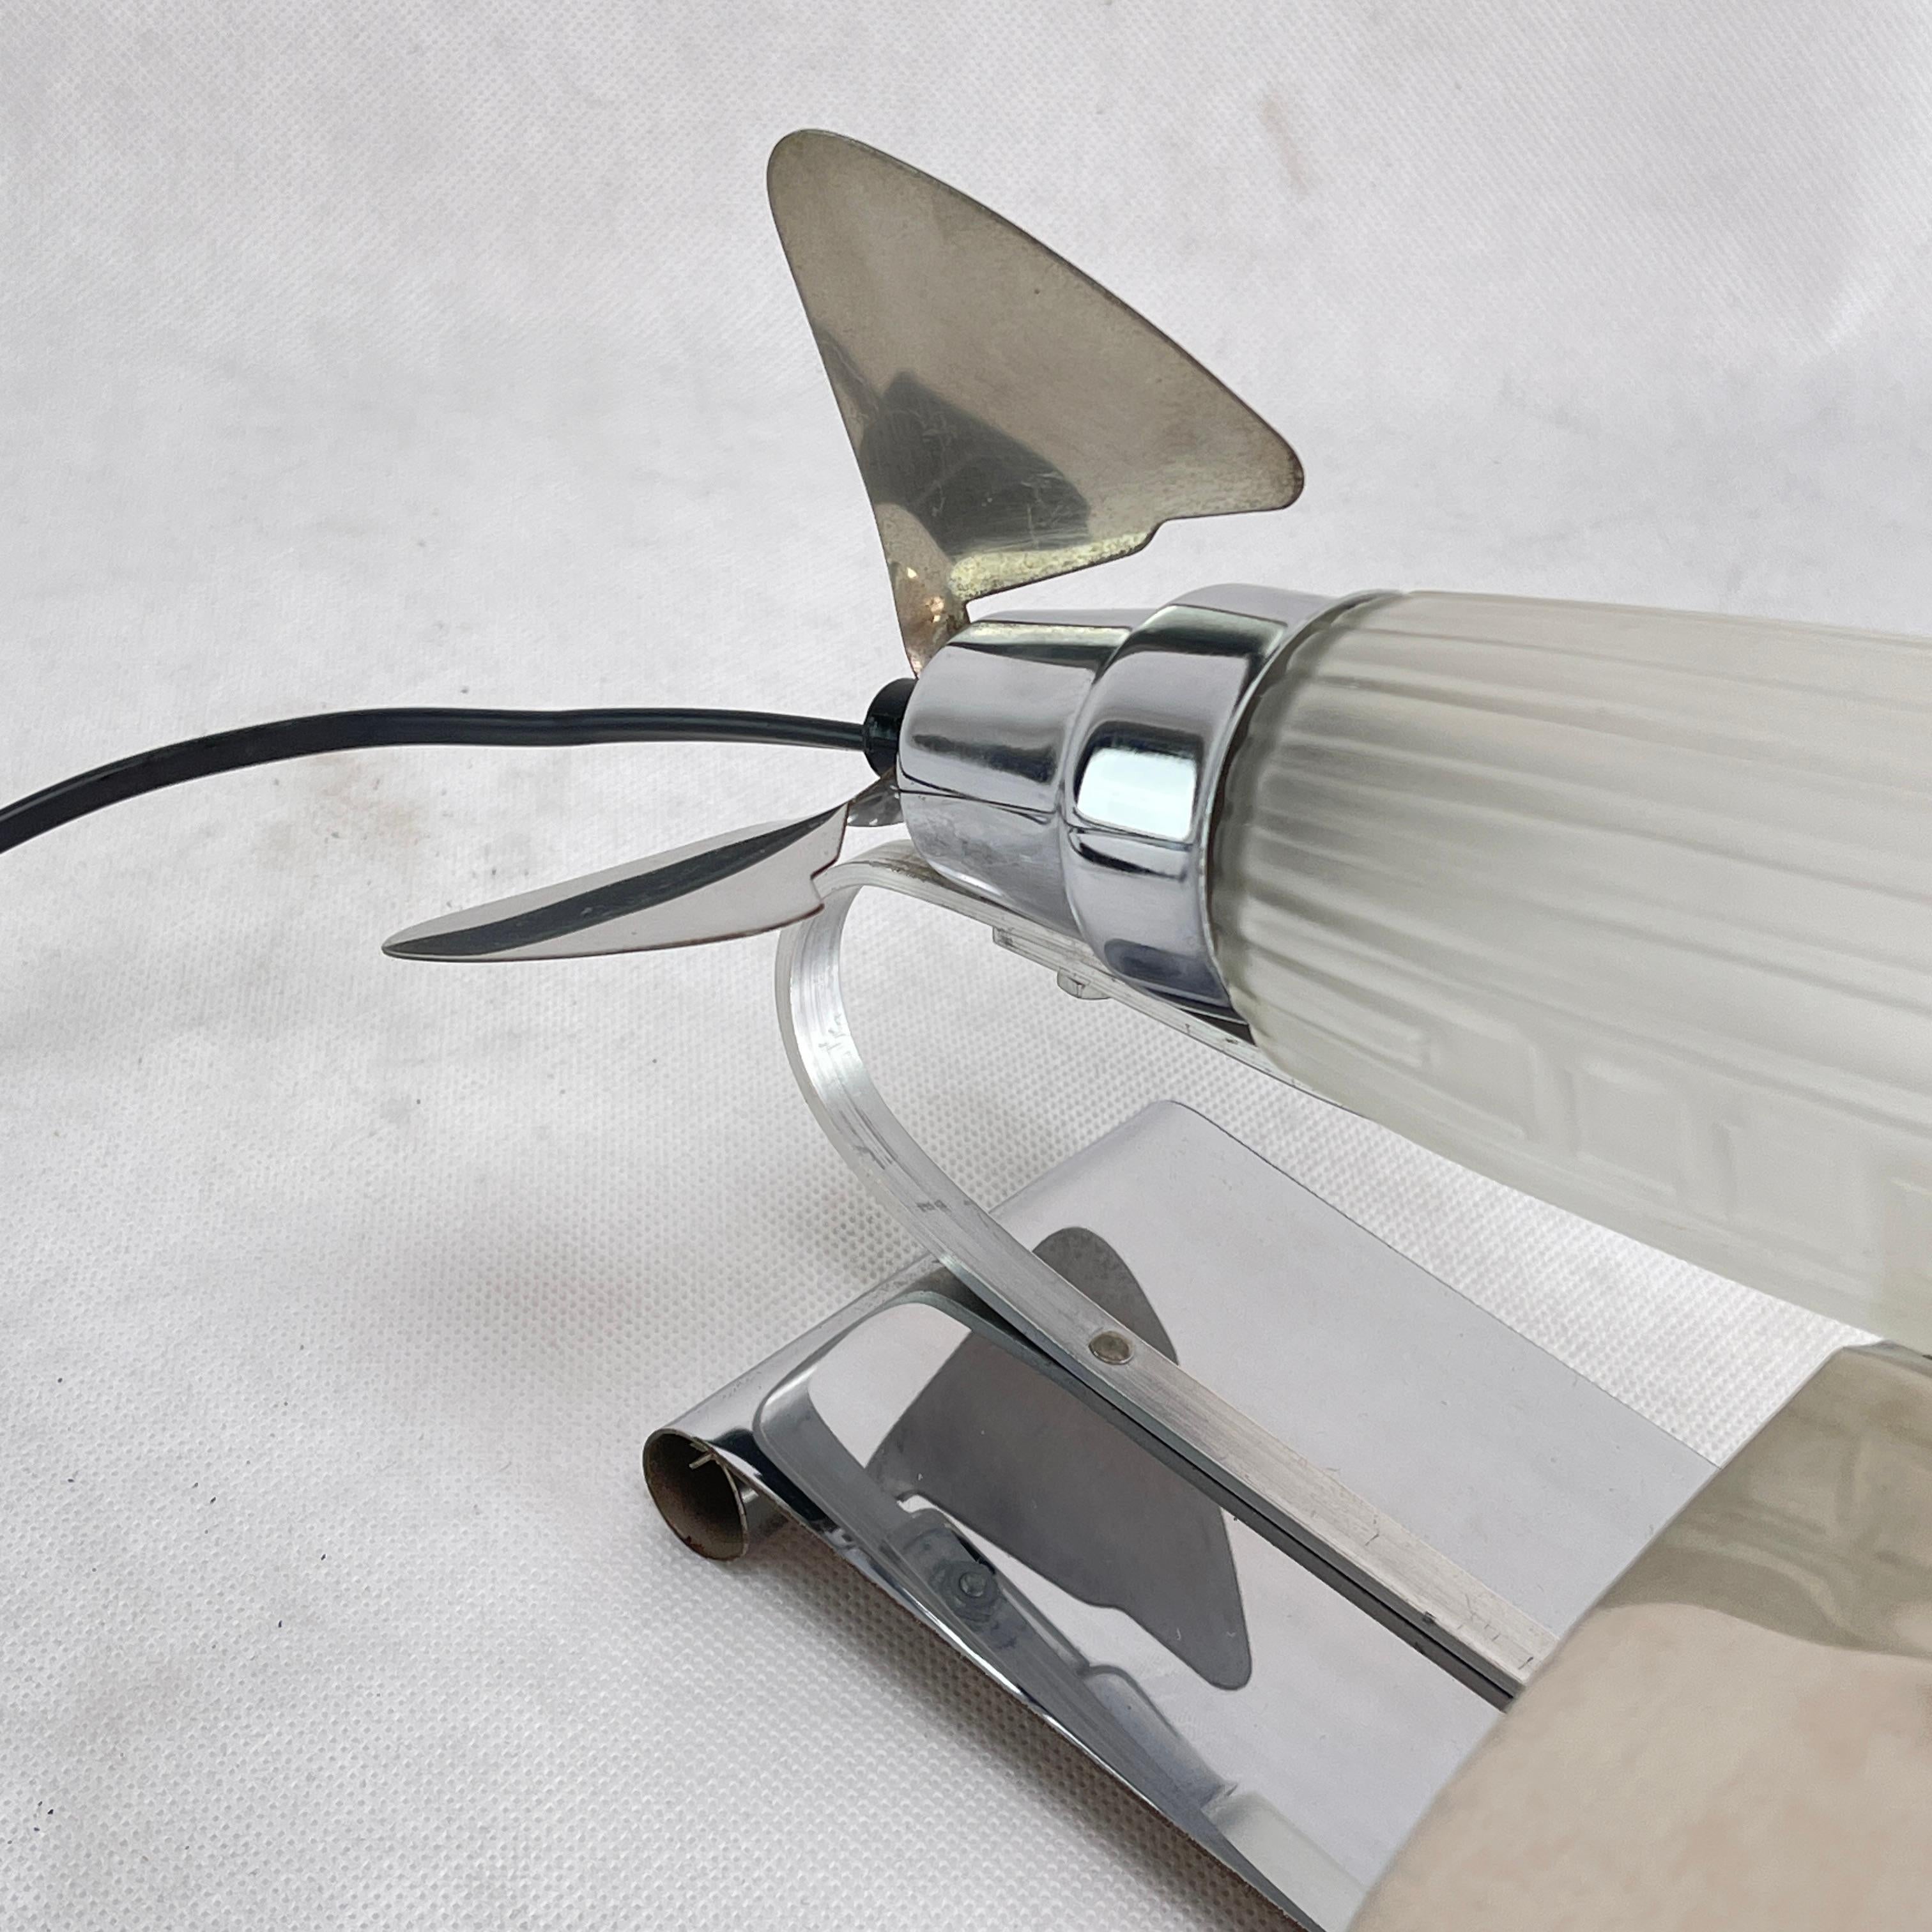 Metal Table Lamp by Sarsaparilla, Dakota DC-3 Airplane, 70s design